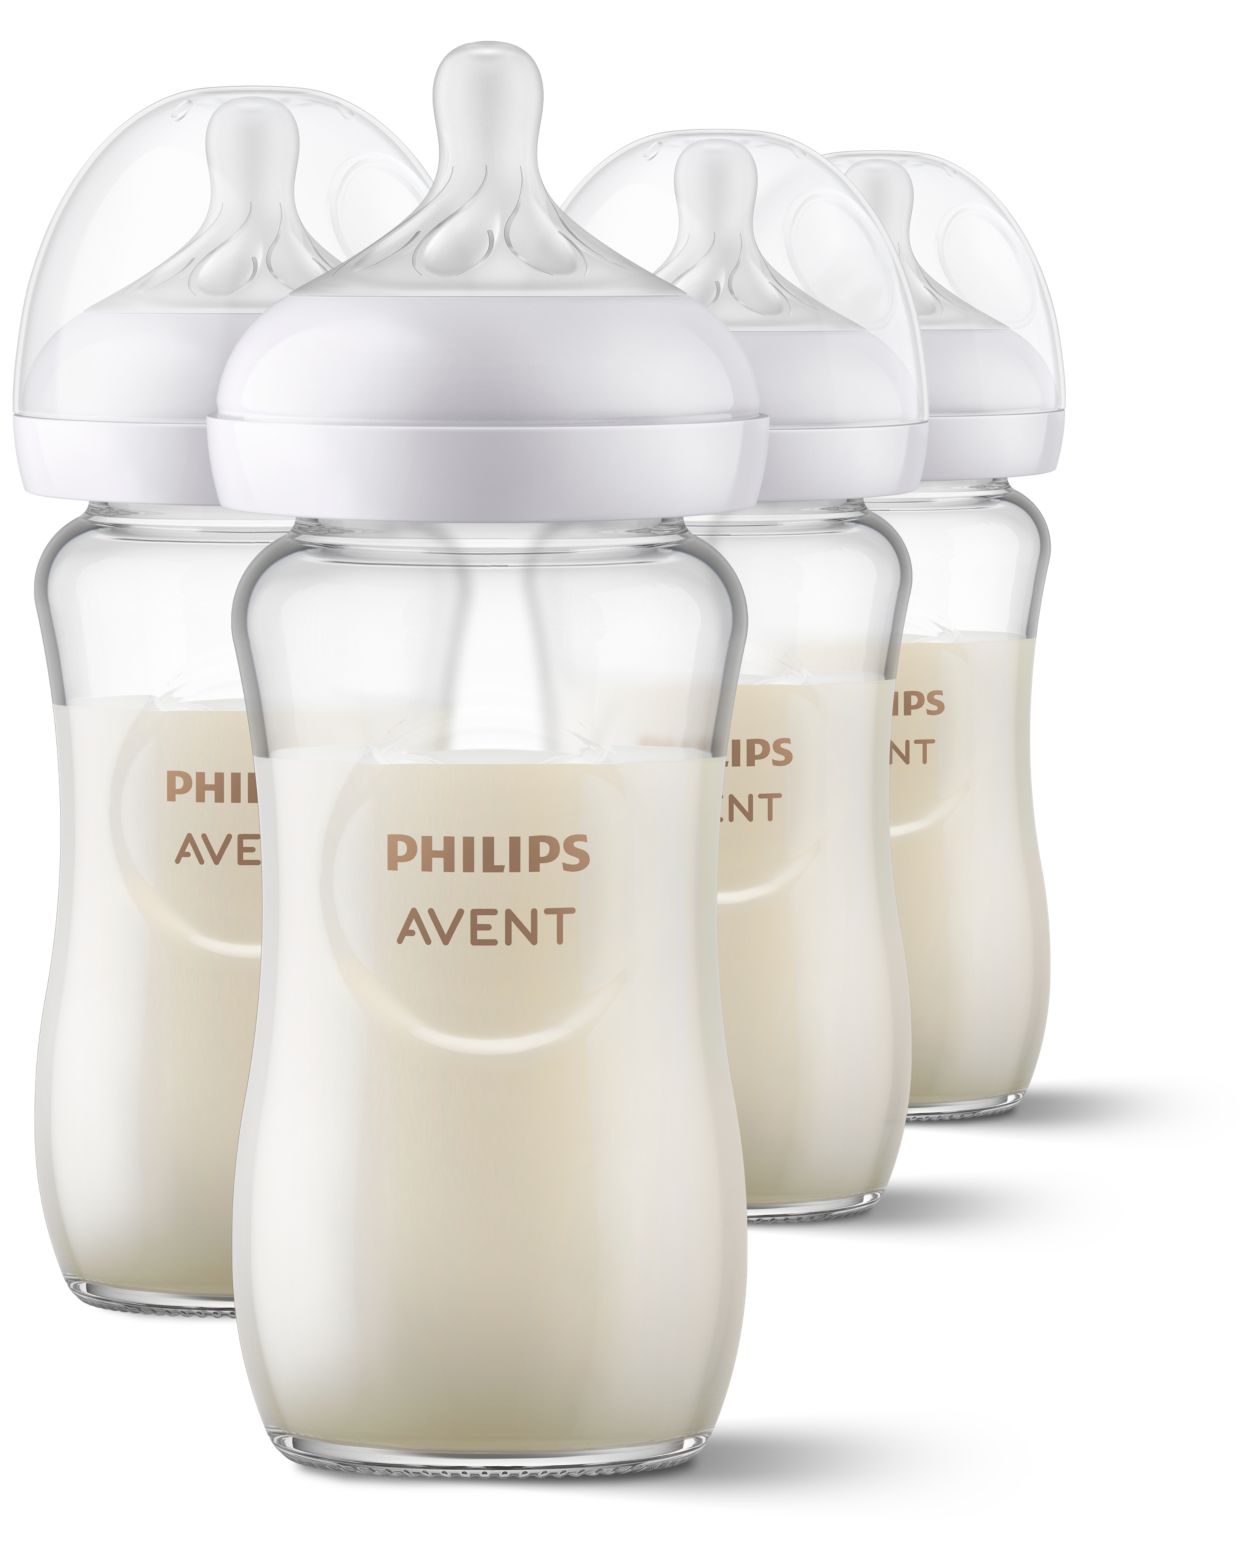 Promo Baby Bottles (8 Oz.)